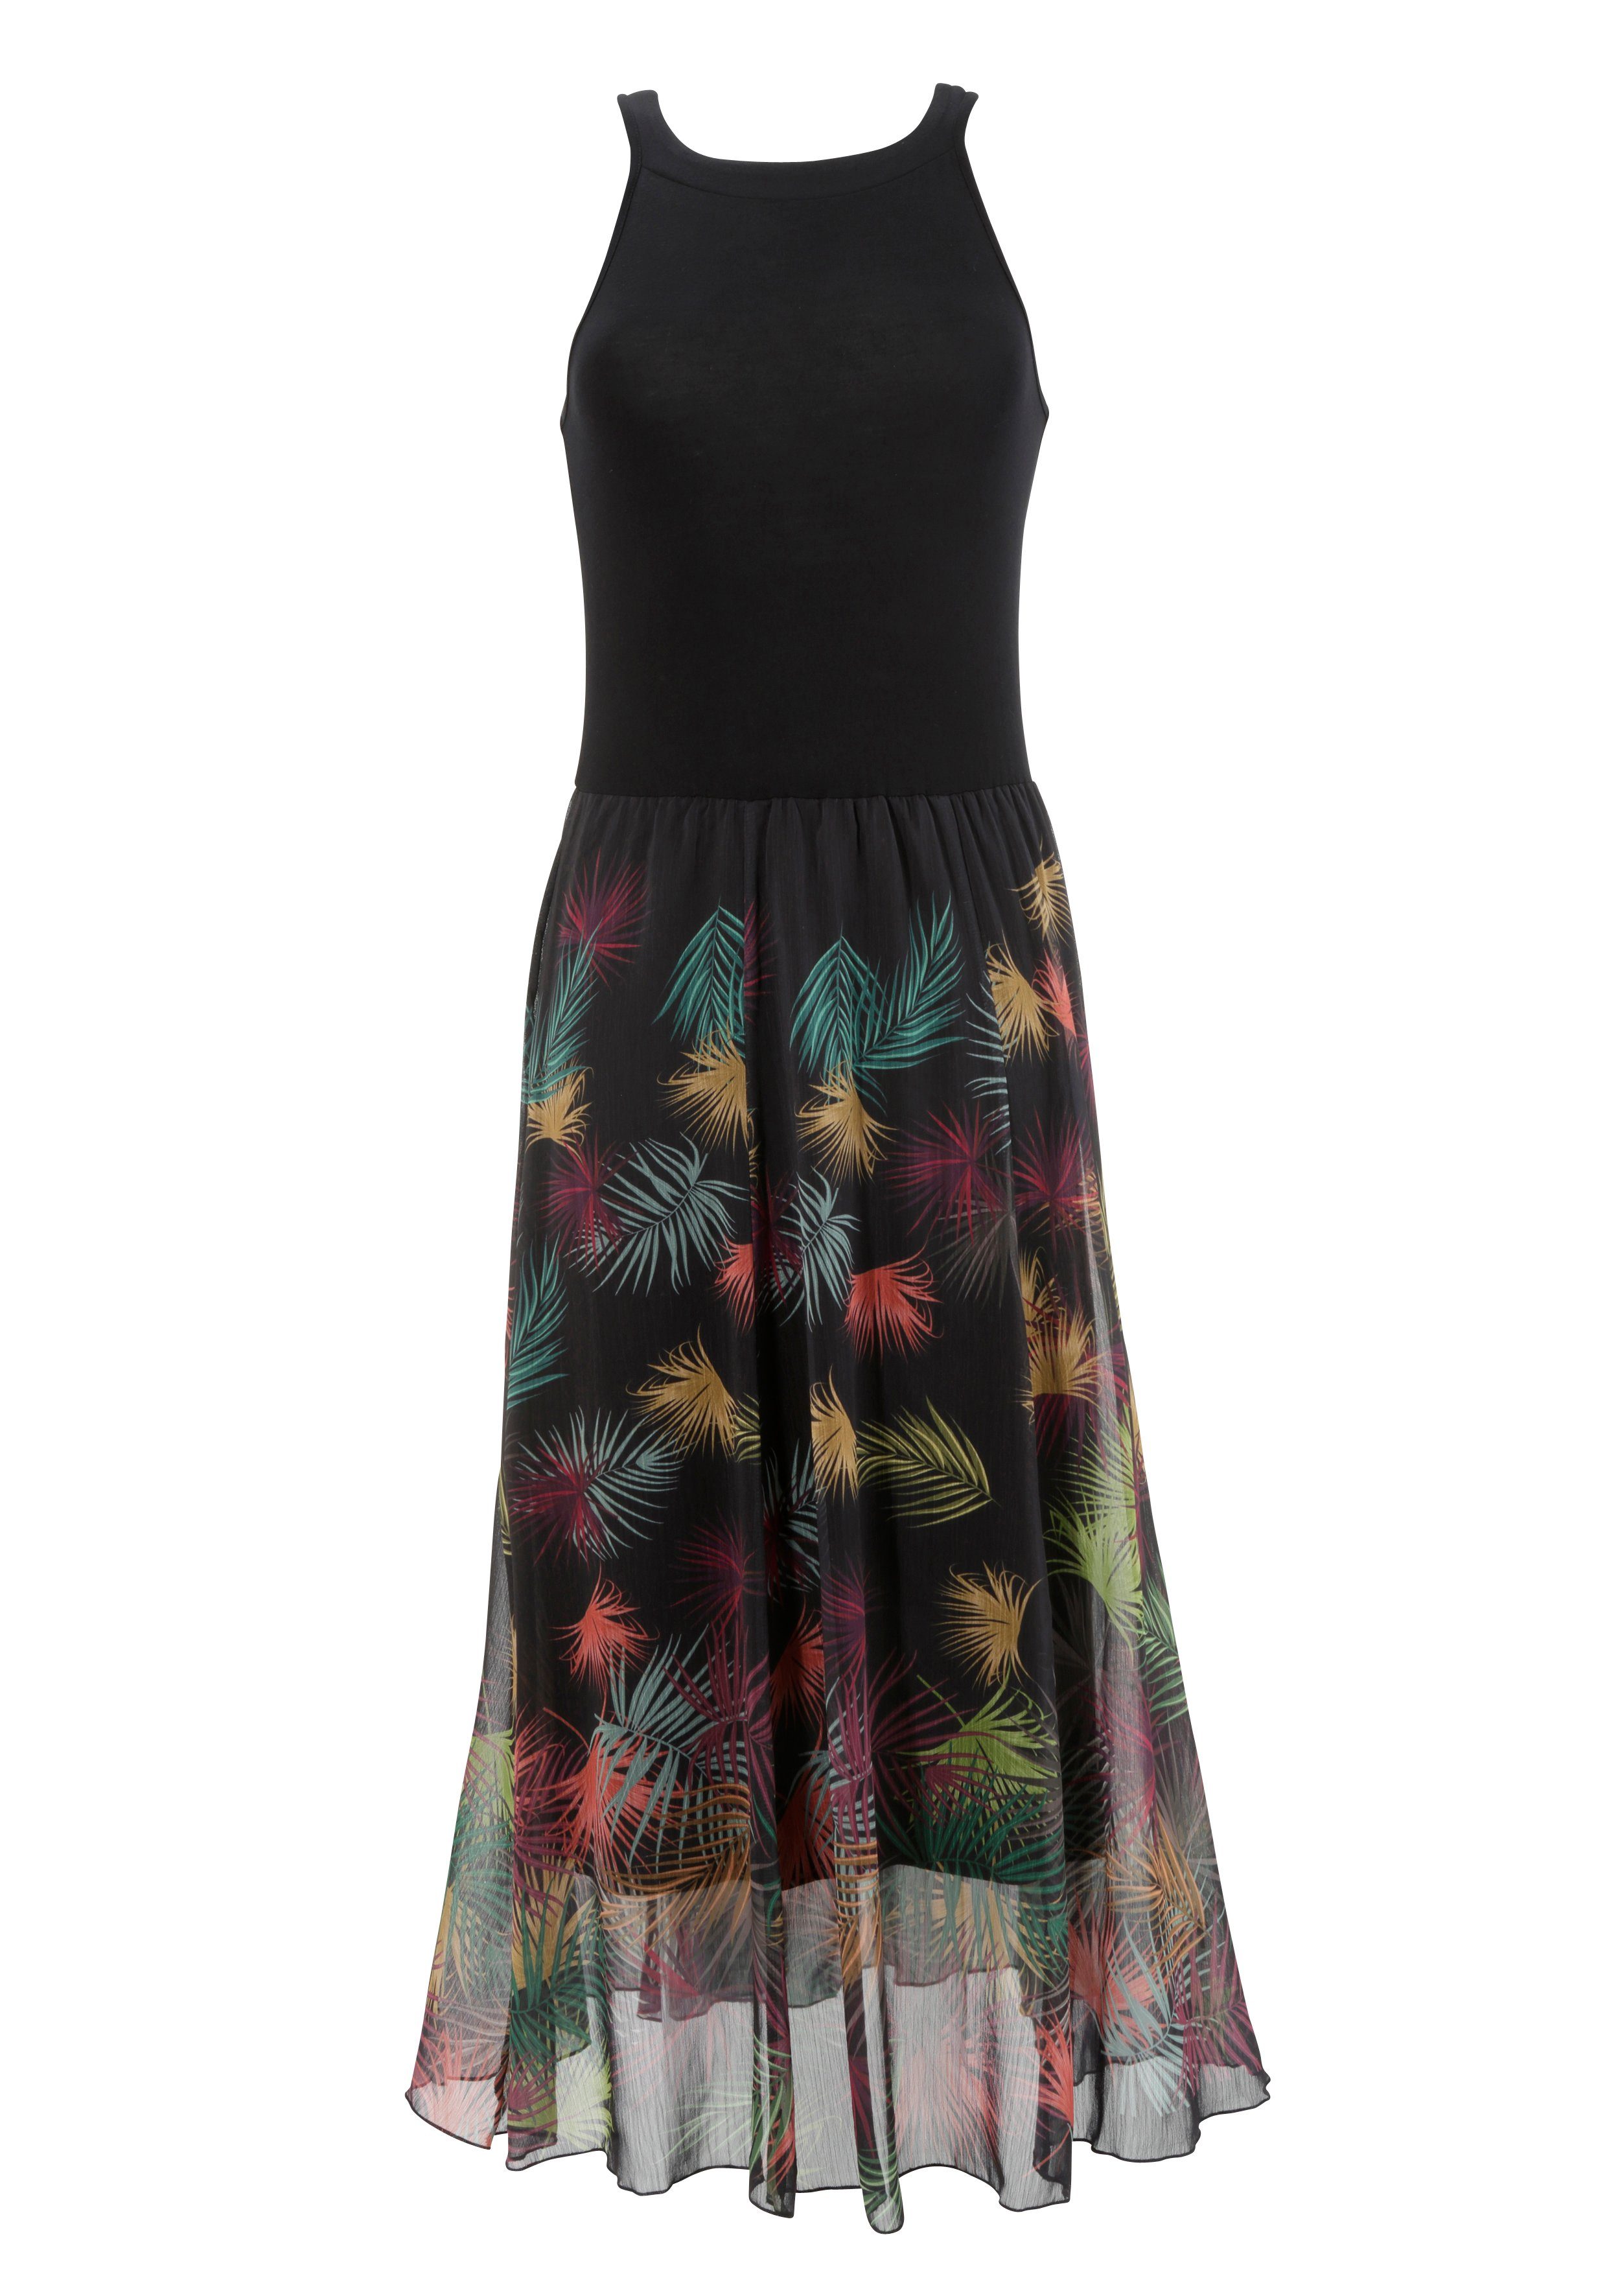 Blätterdruck mit Sommerkleid SELECTED Aniston buntem